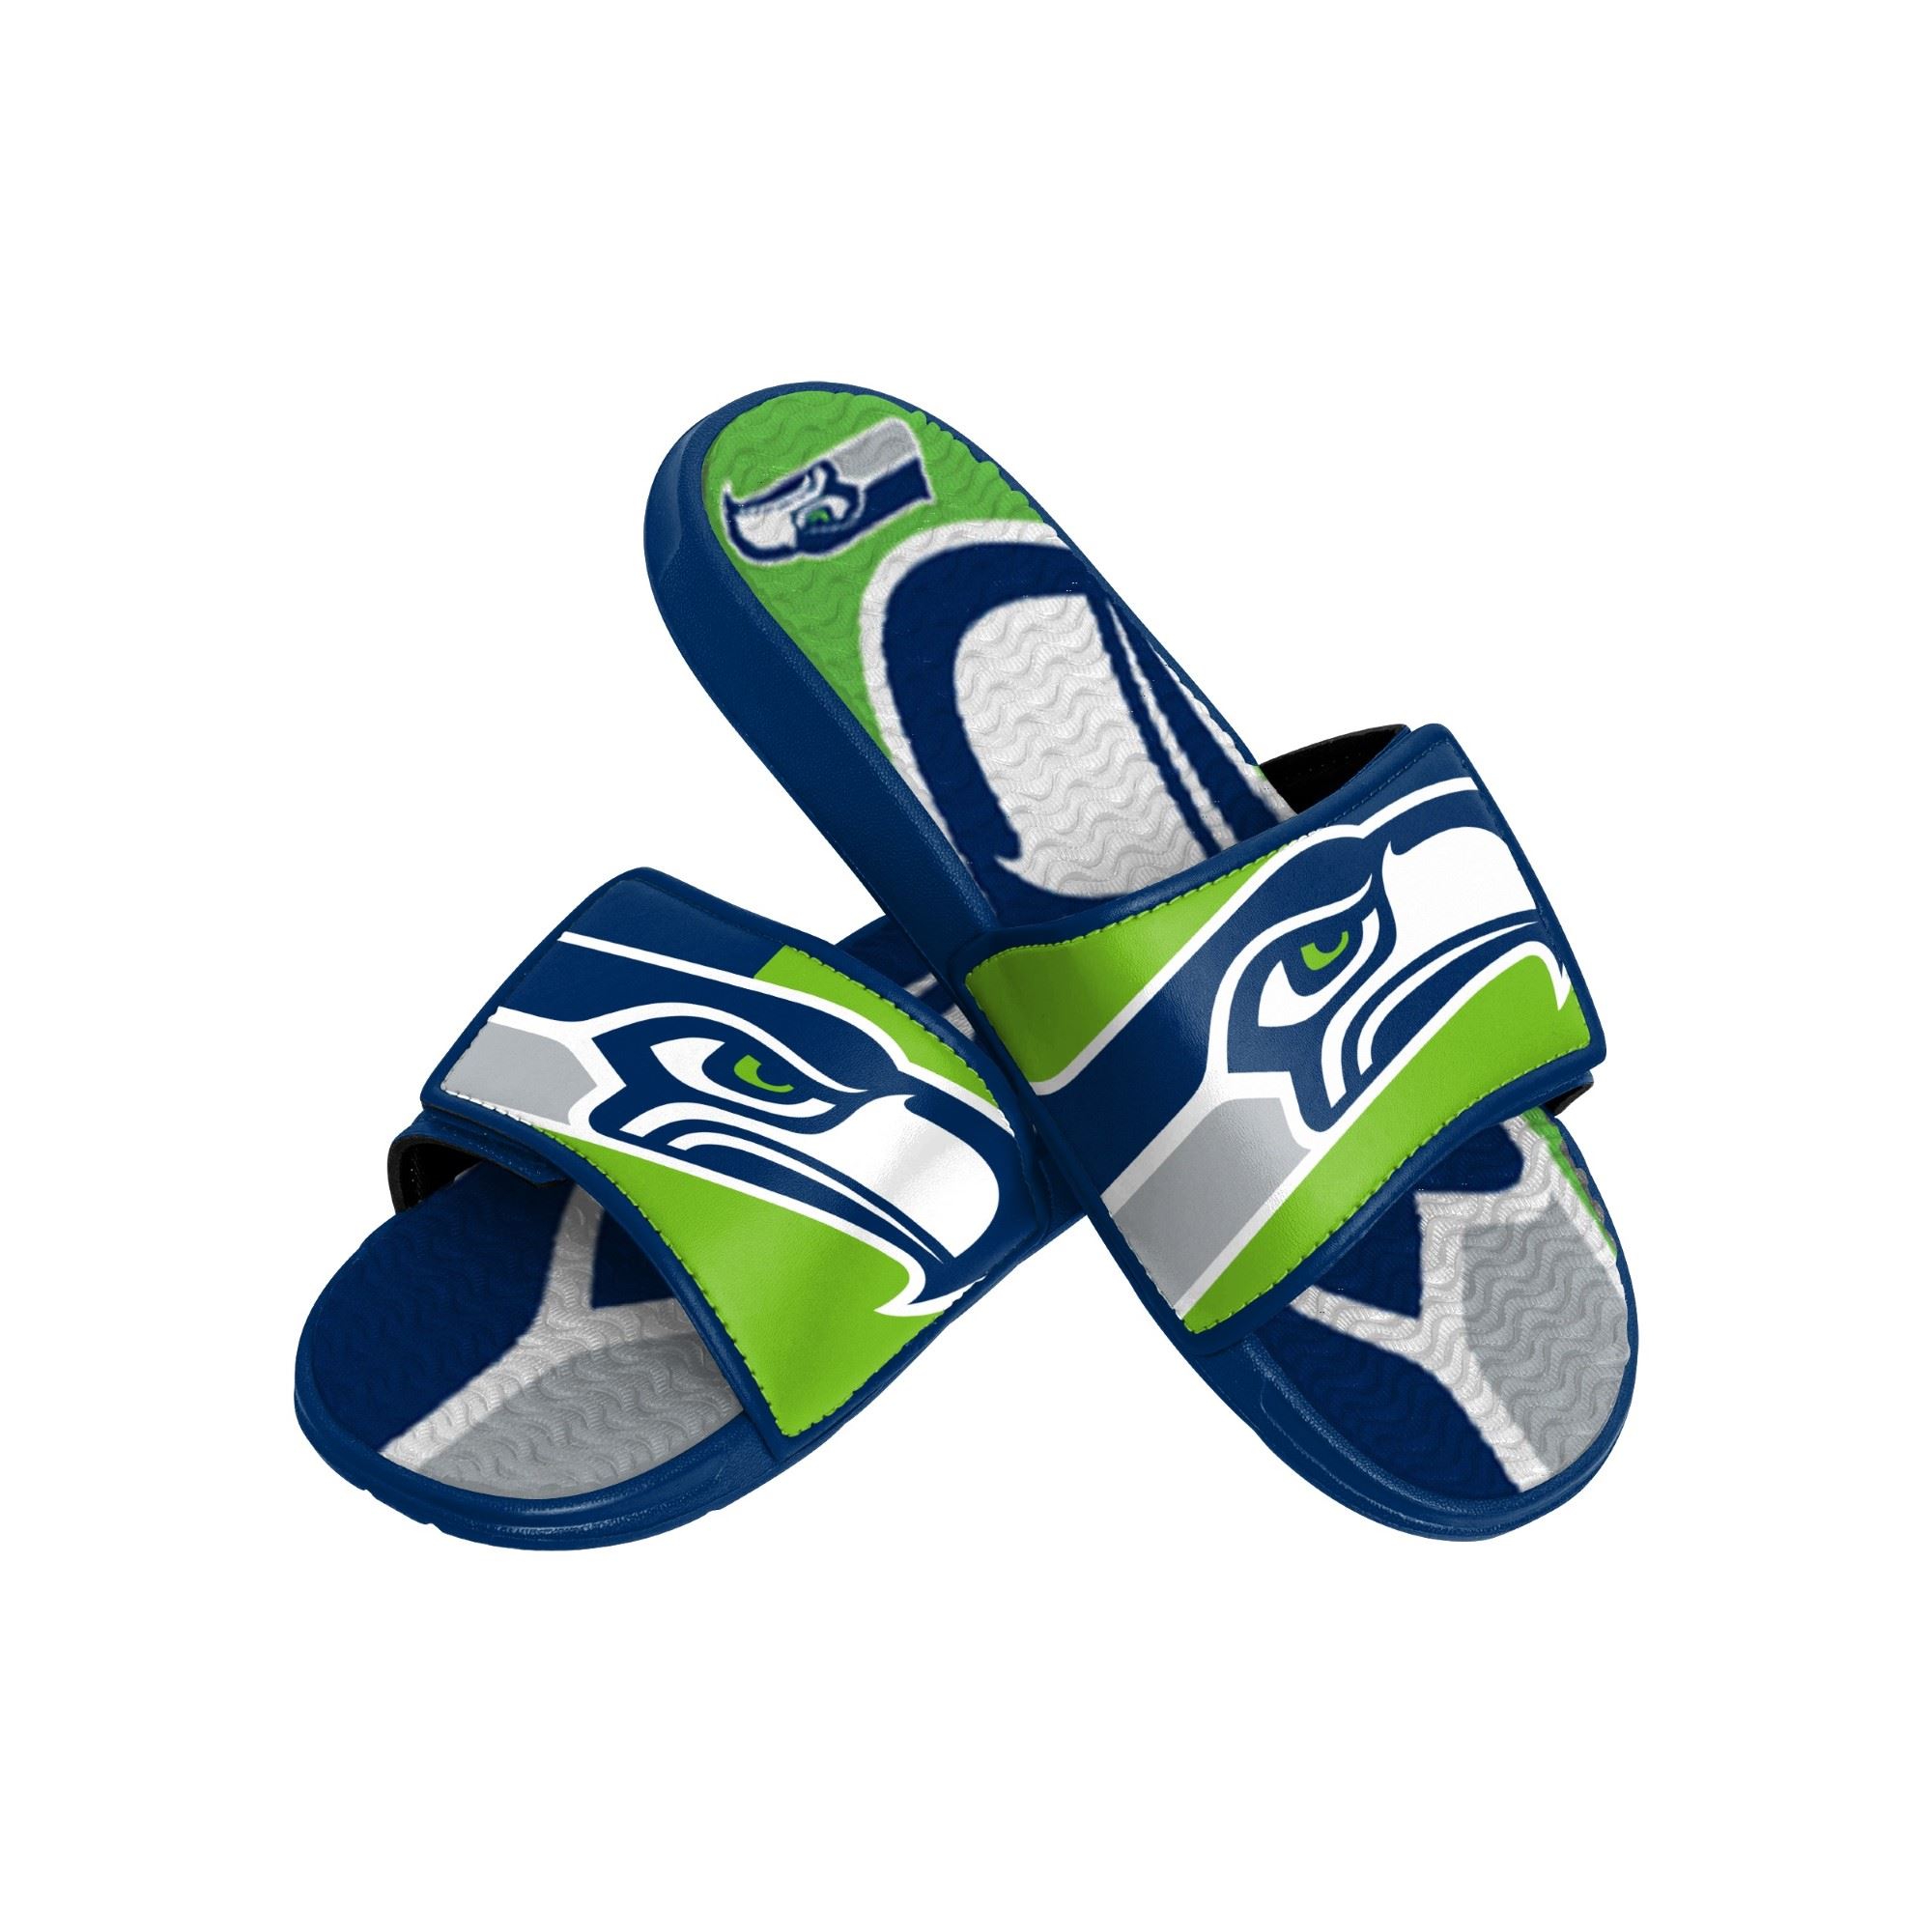 Seattle Seahawks NFL Colorblock Big Logo Gel Slide Blue Green Badelatschen Hausschuhe Foco 